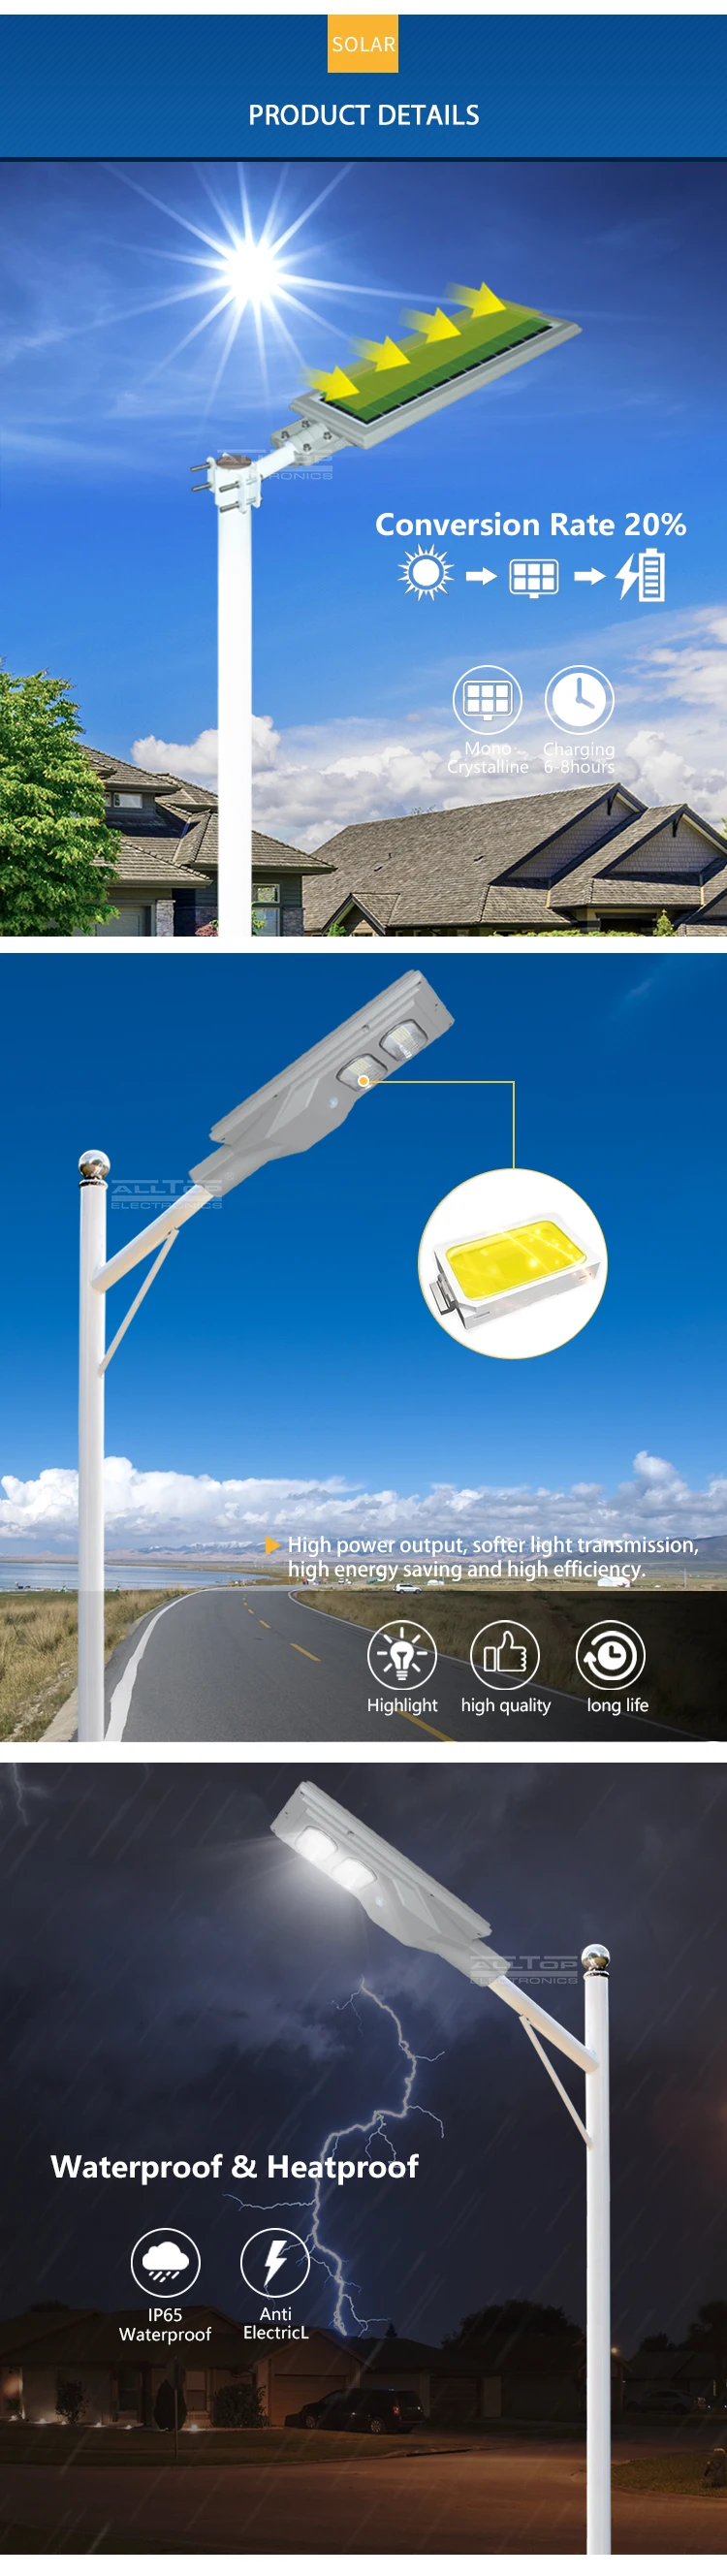 ALLTOP China factory wholesale price high power MPPT solar controller 30 60 90 120 150 watt all in one solar led street light